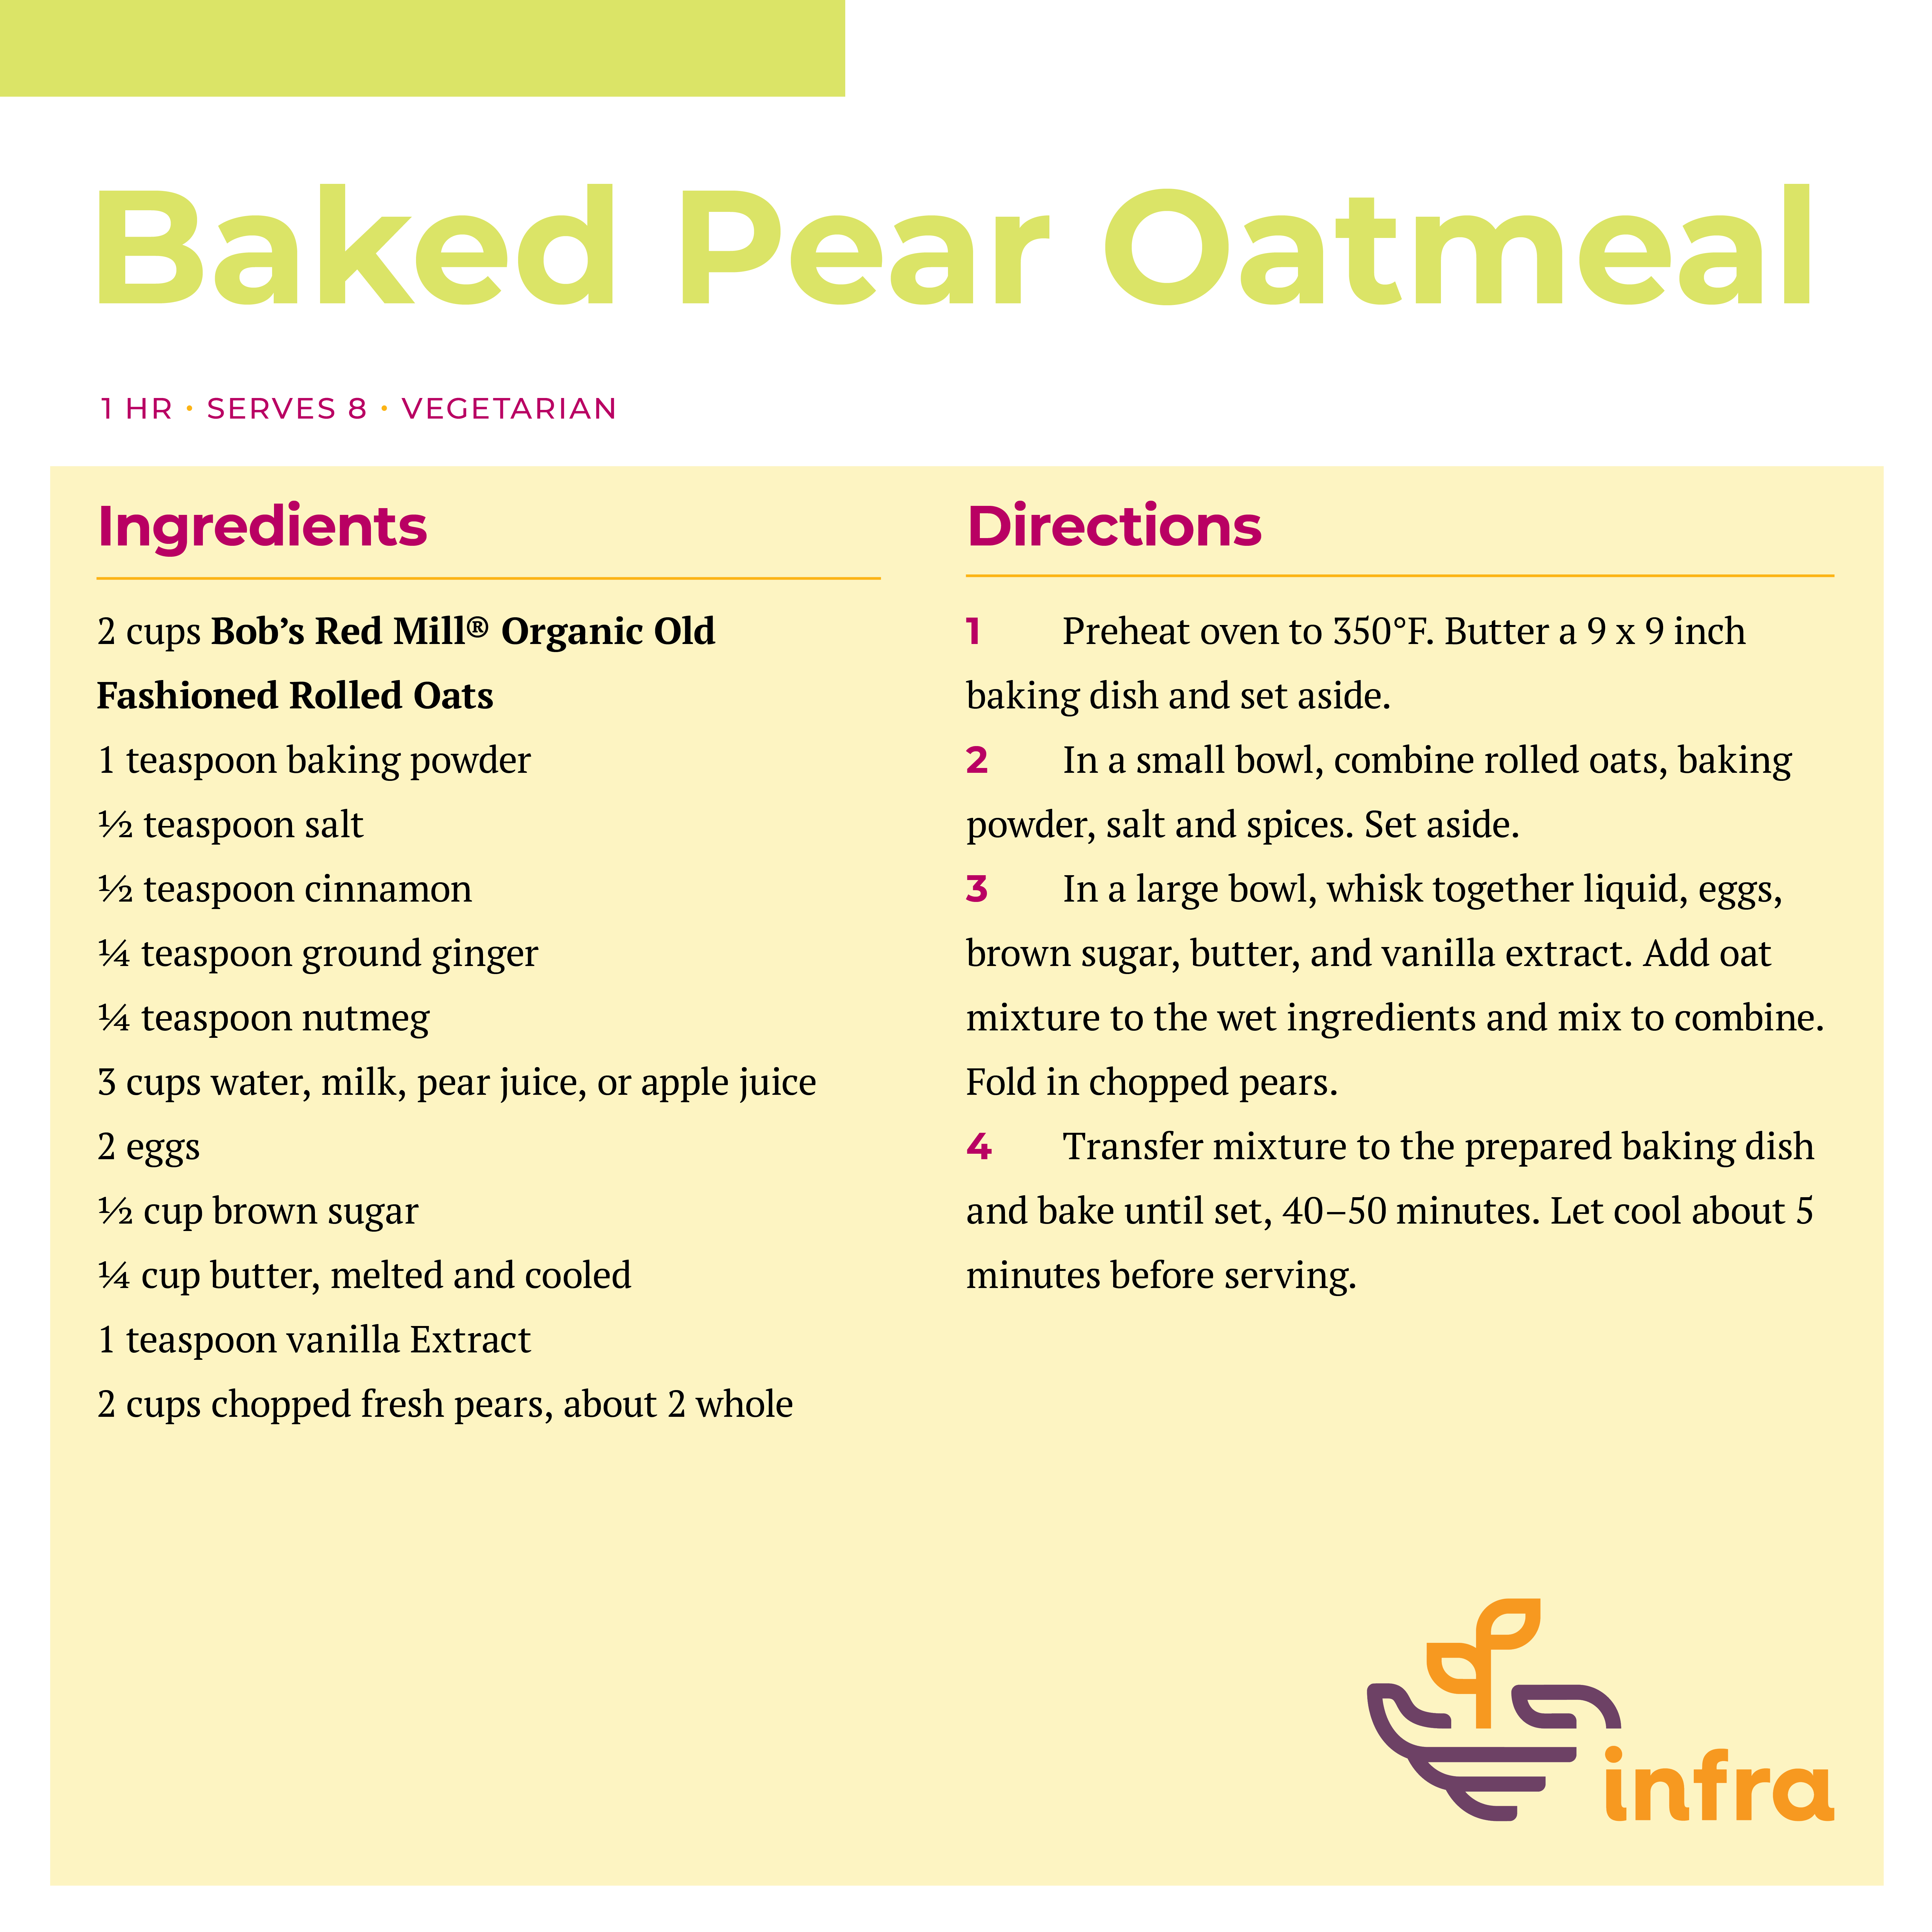 Baked Pear Oatmeal